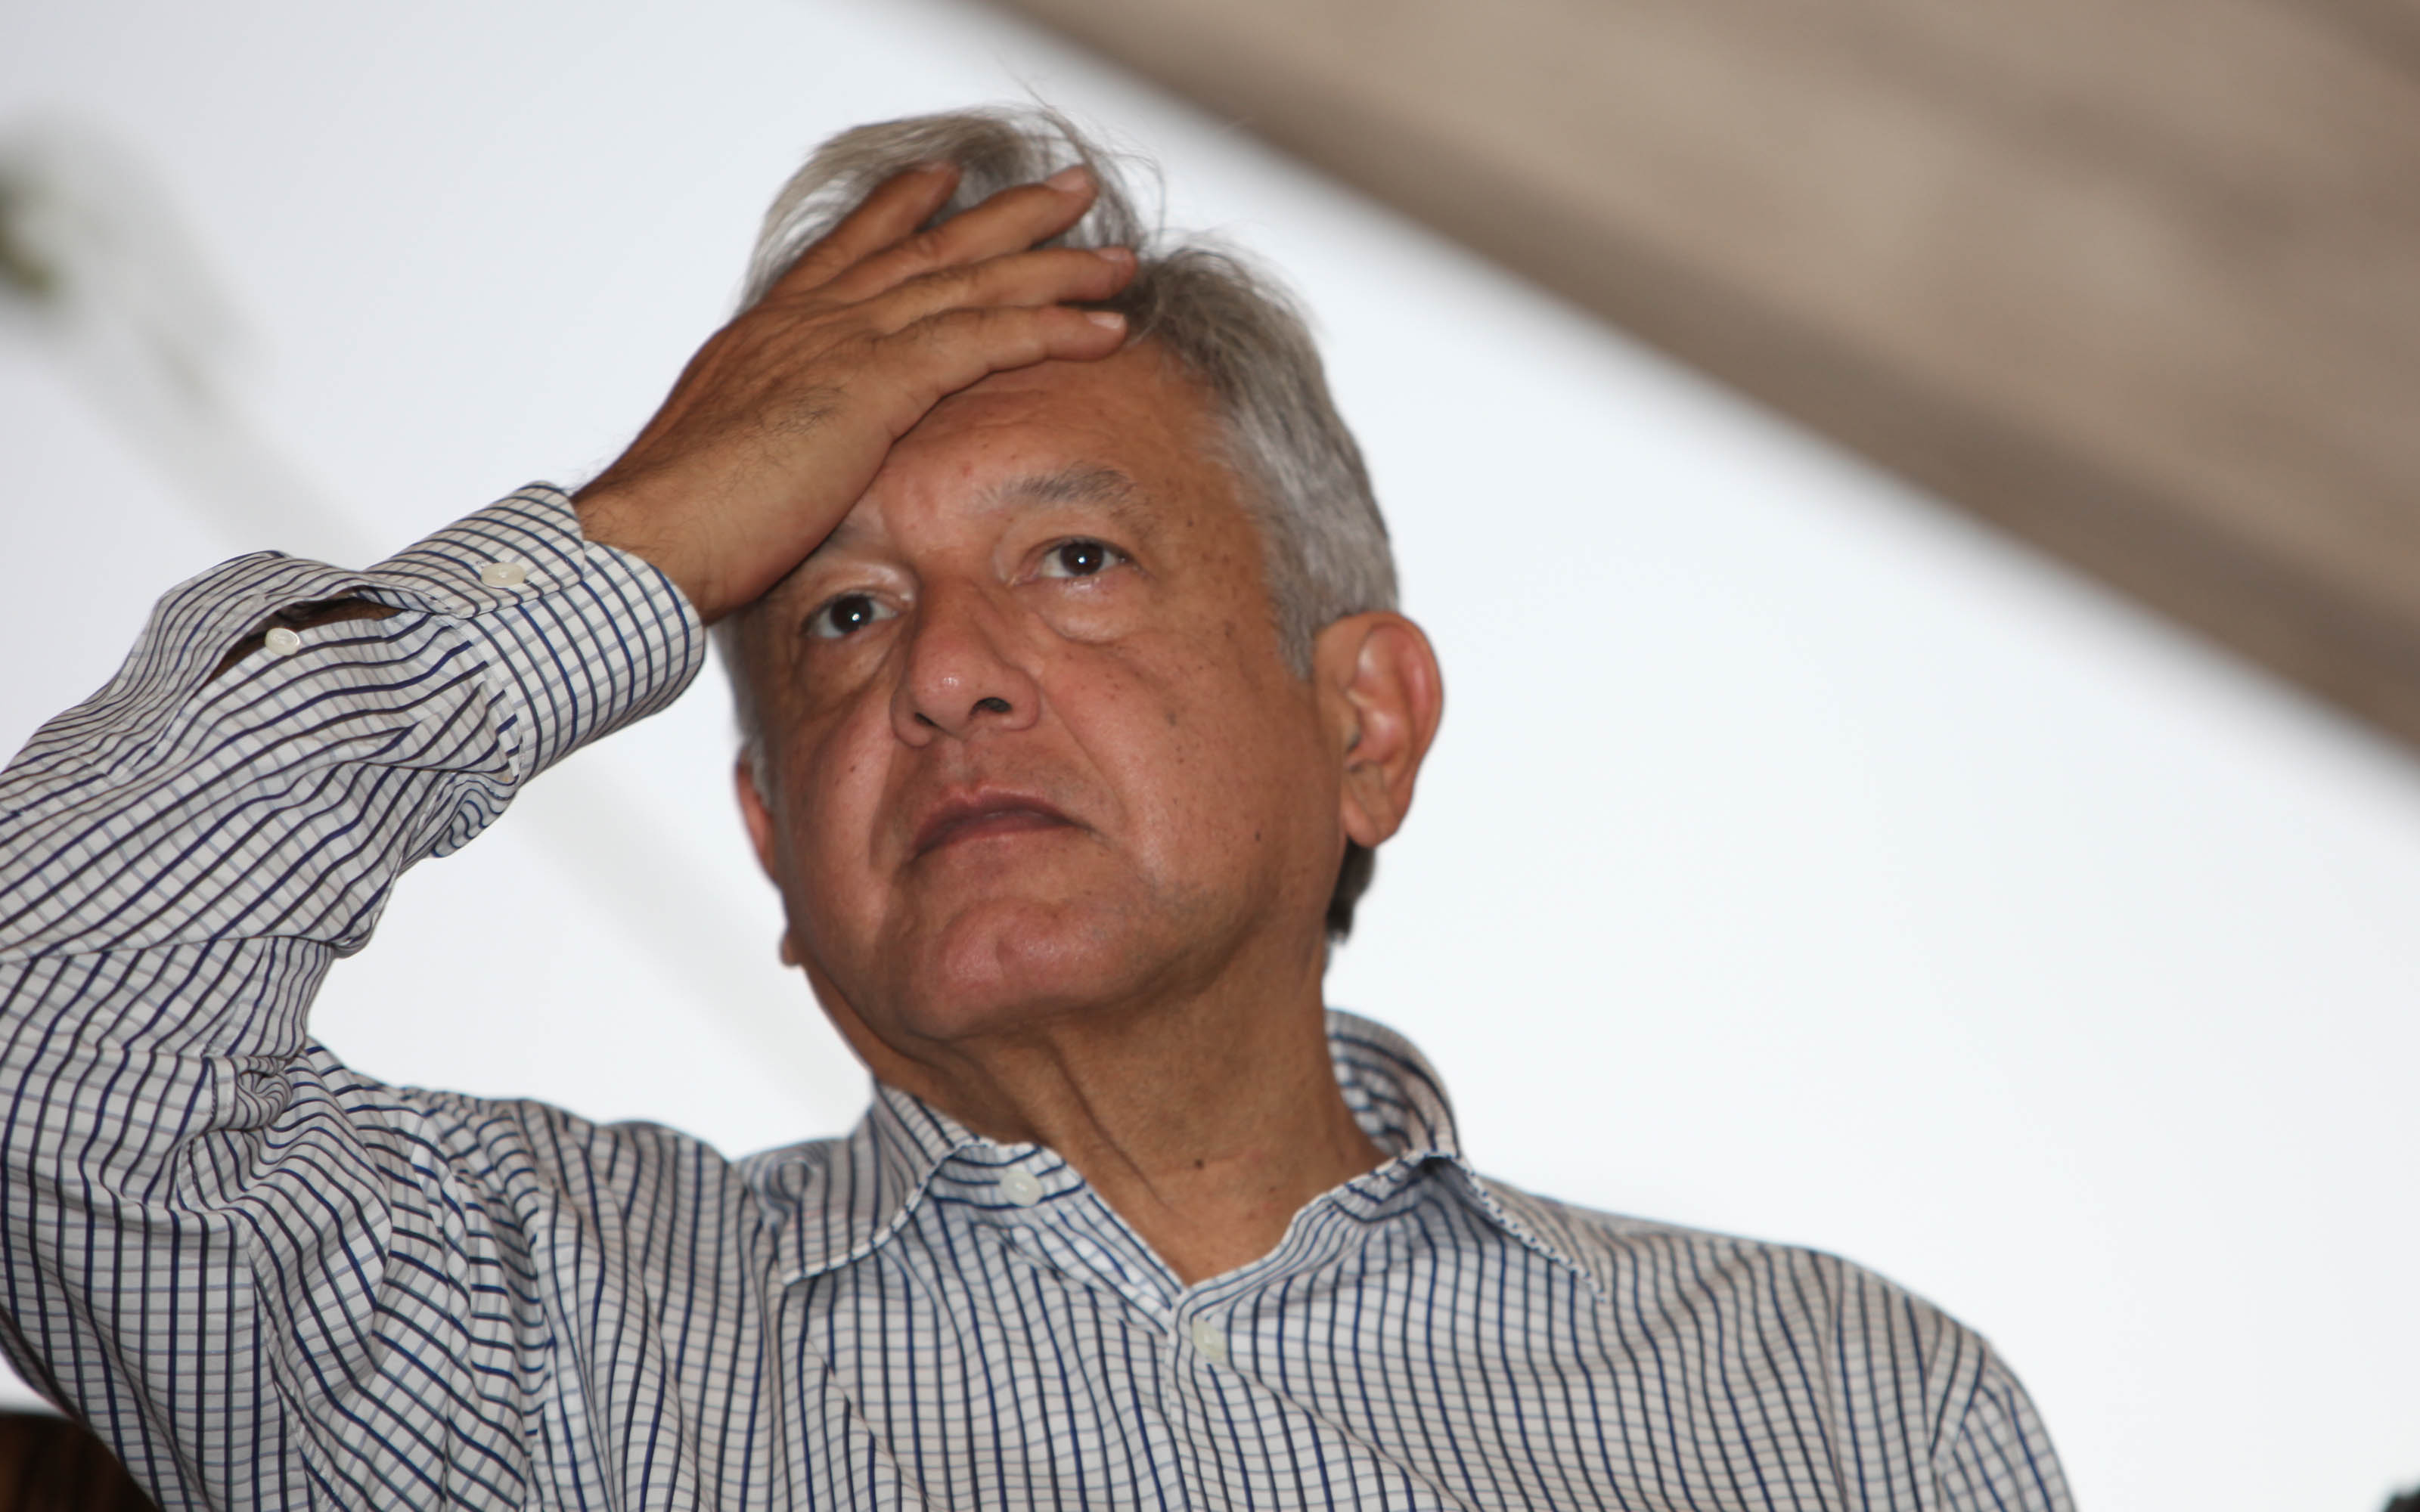  López Obrador sigue sin cumplir entrega de 3de3